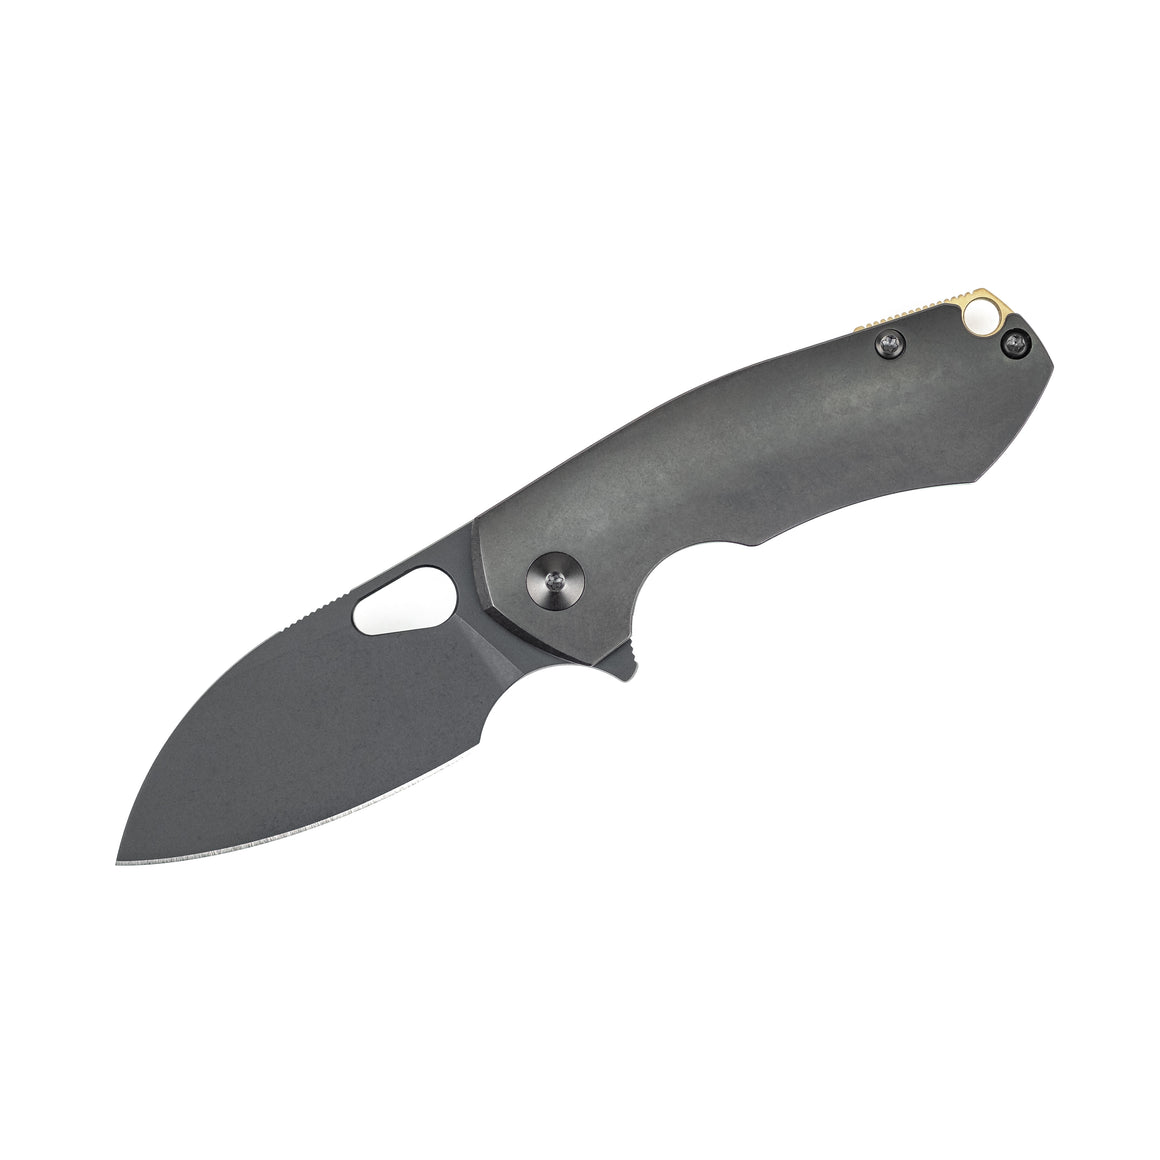 ACE Riv - Titanium Blackout - EDC knife - PVD Finish blade steel